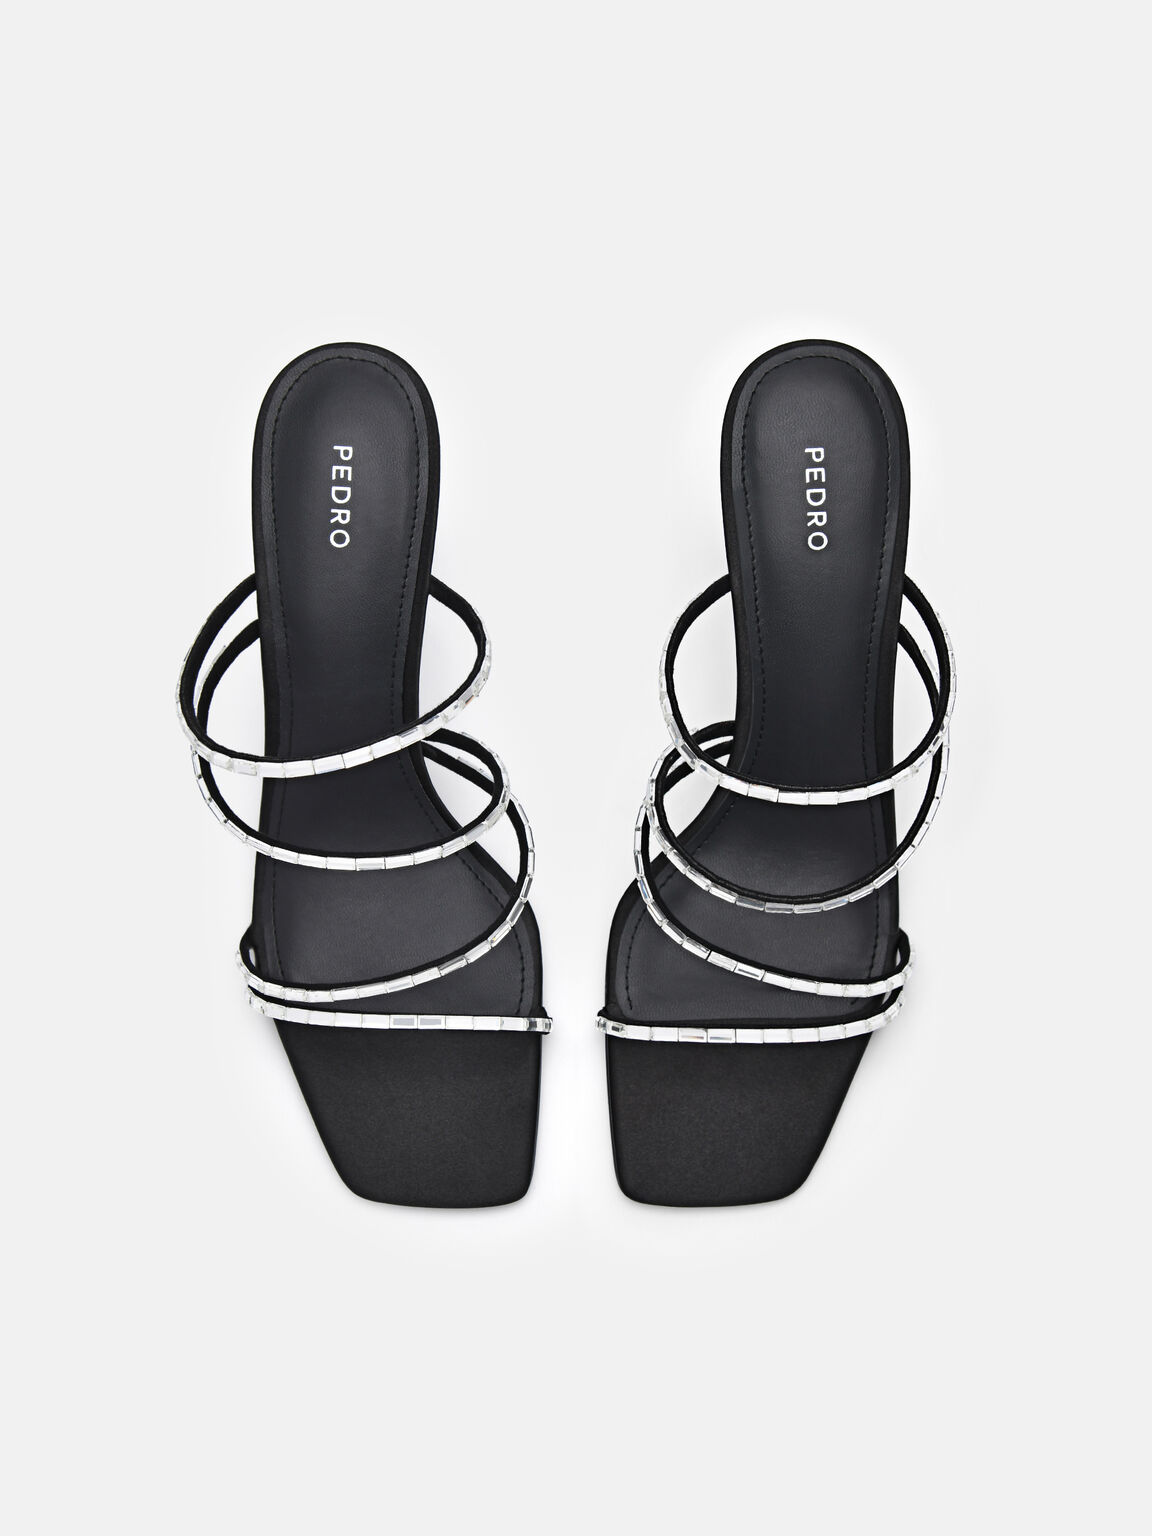 Savannah Heel Sandals, Black, hi-res